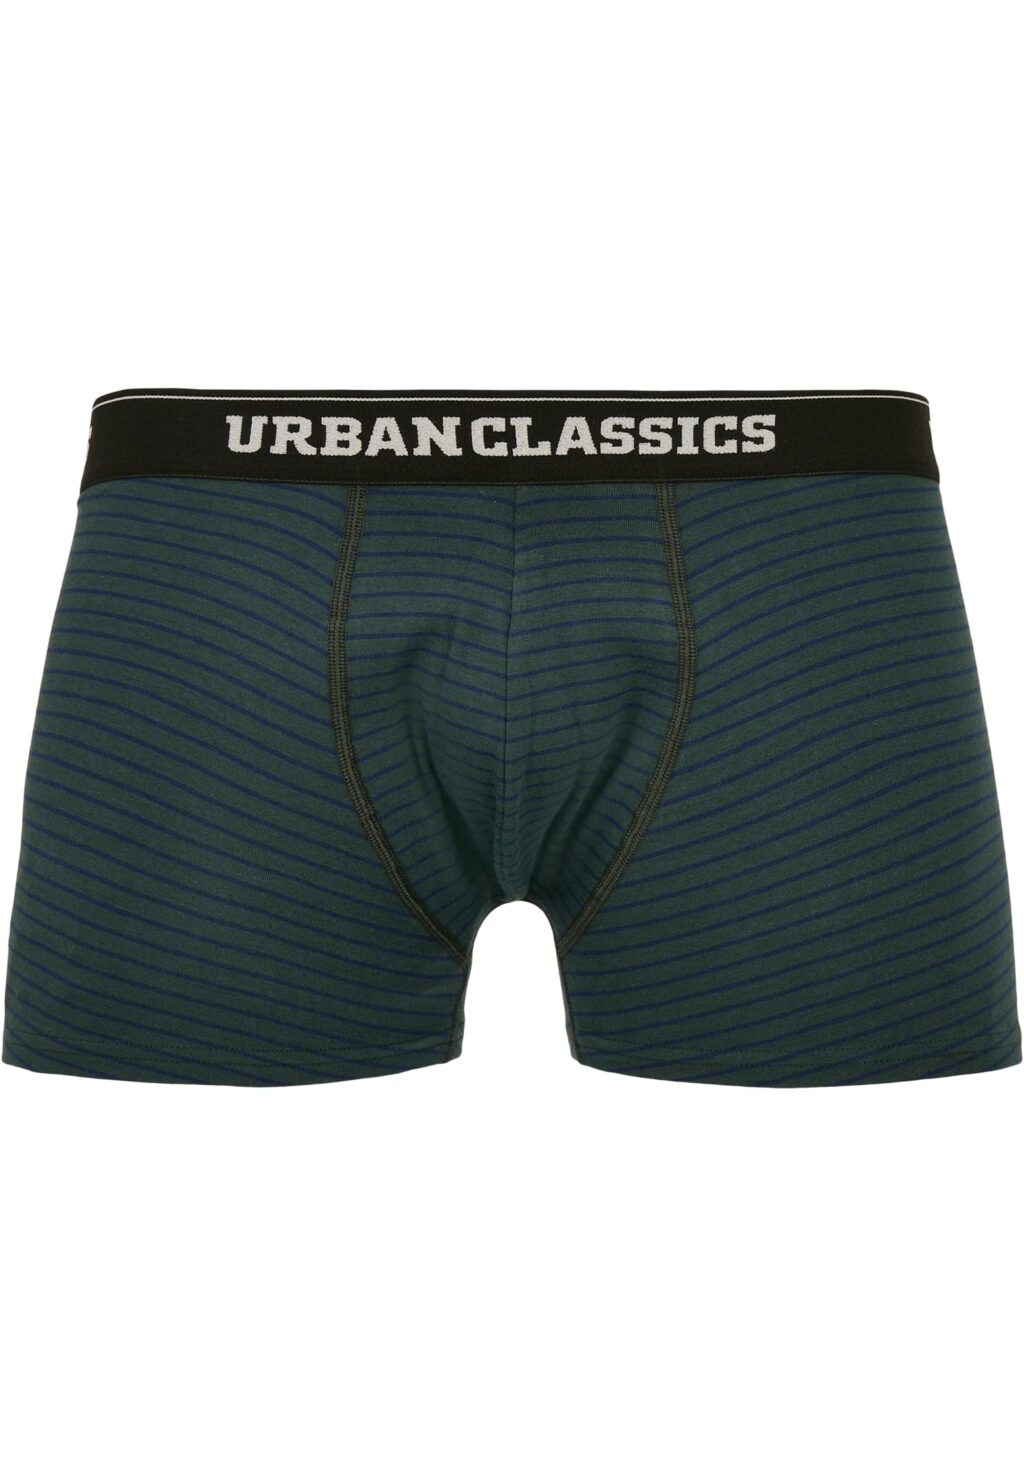 Urban Classics Boxer Shorts 3-Pack dgrn plaidaop+btlgrn/dblu+dgrn TB3841